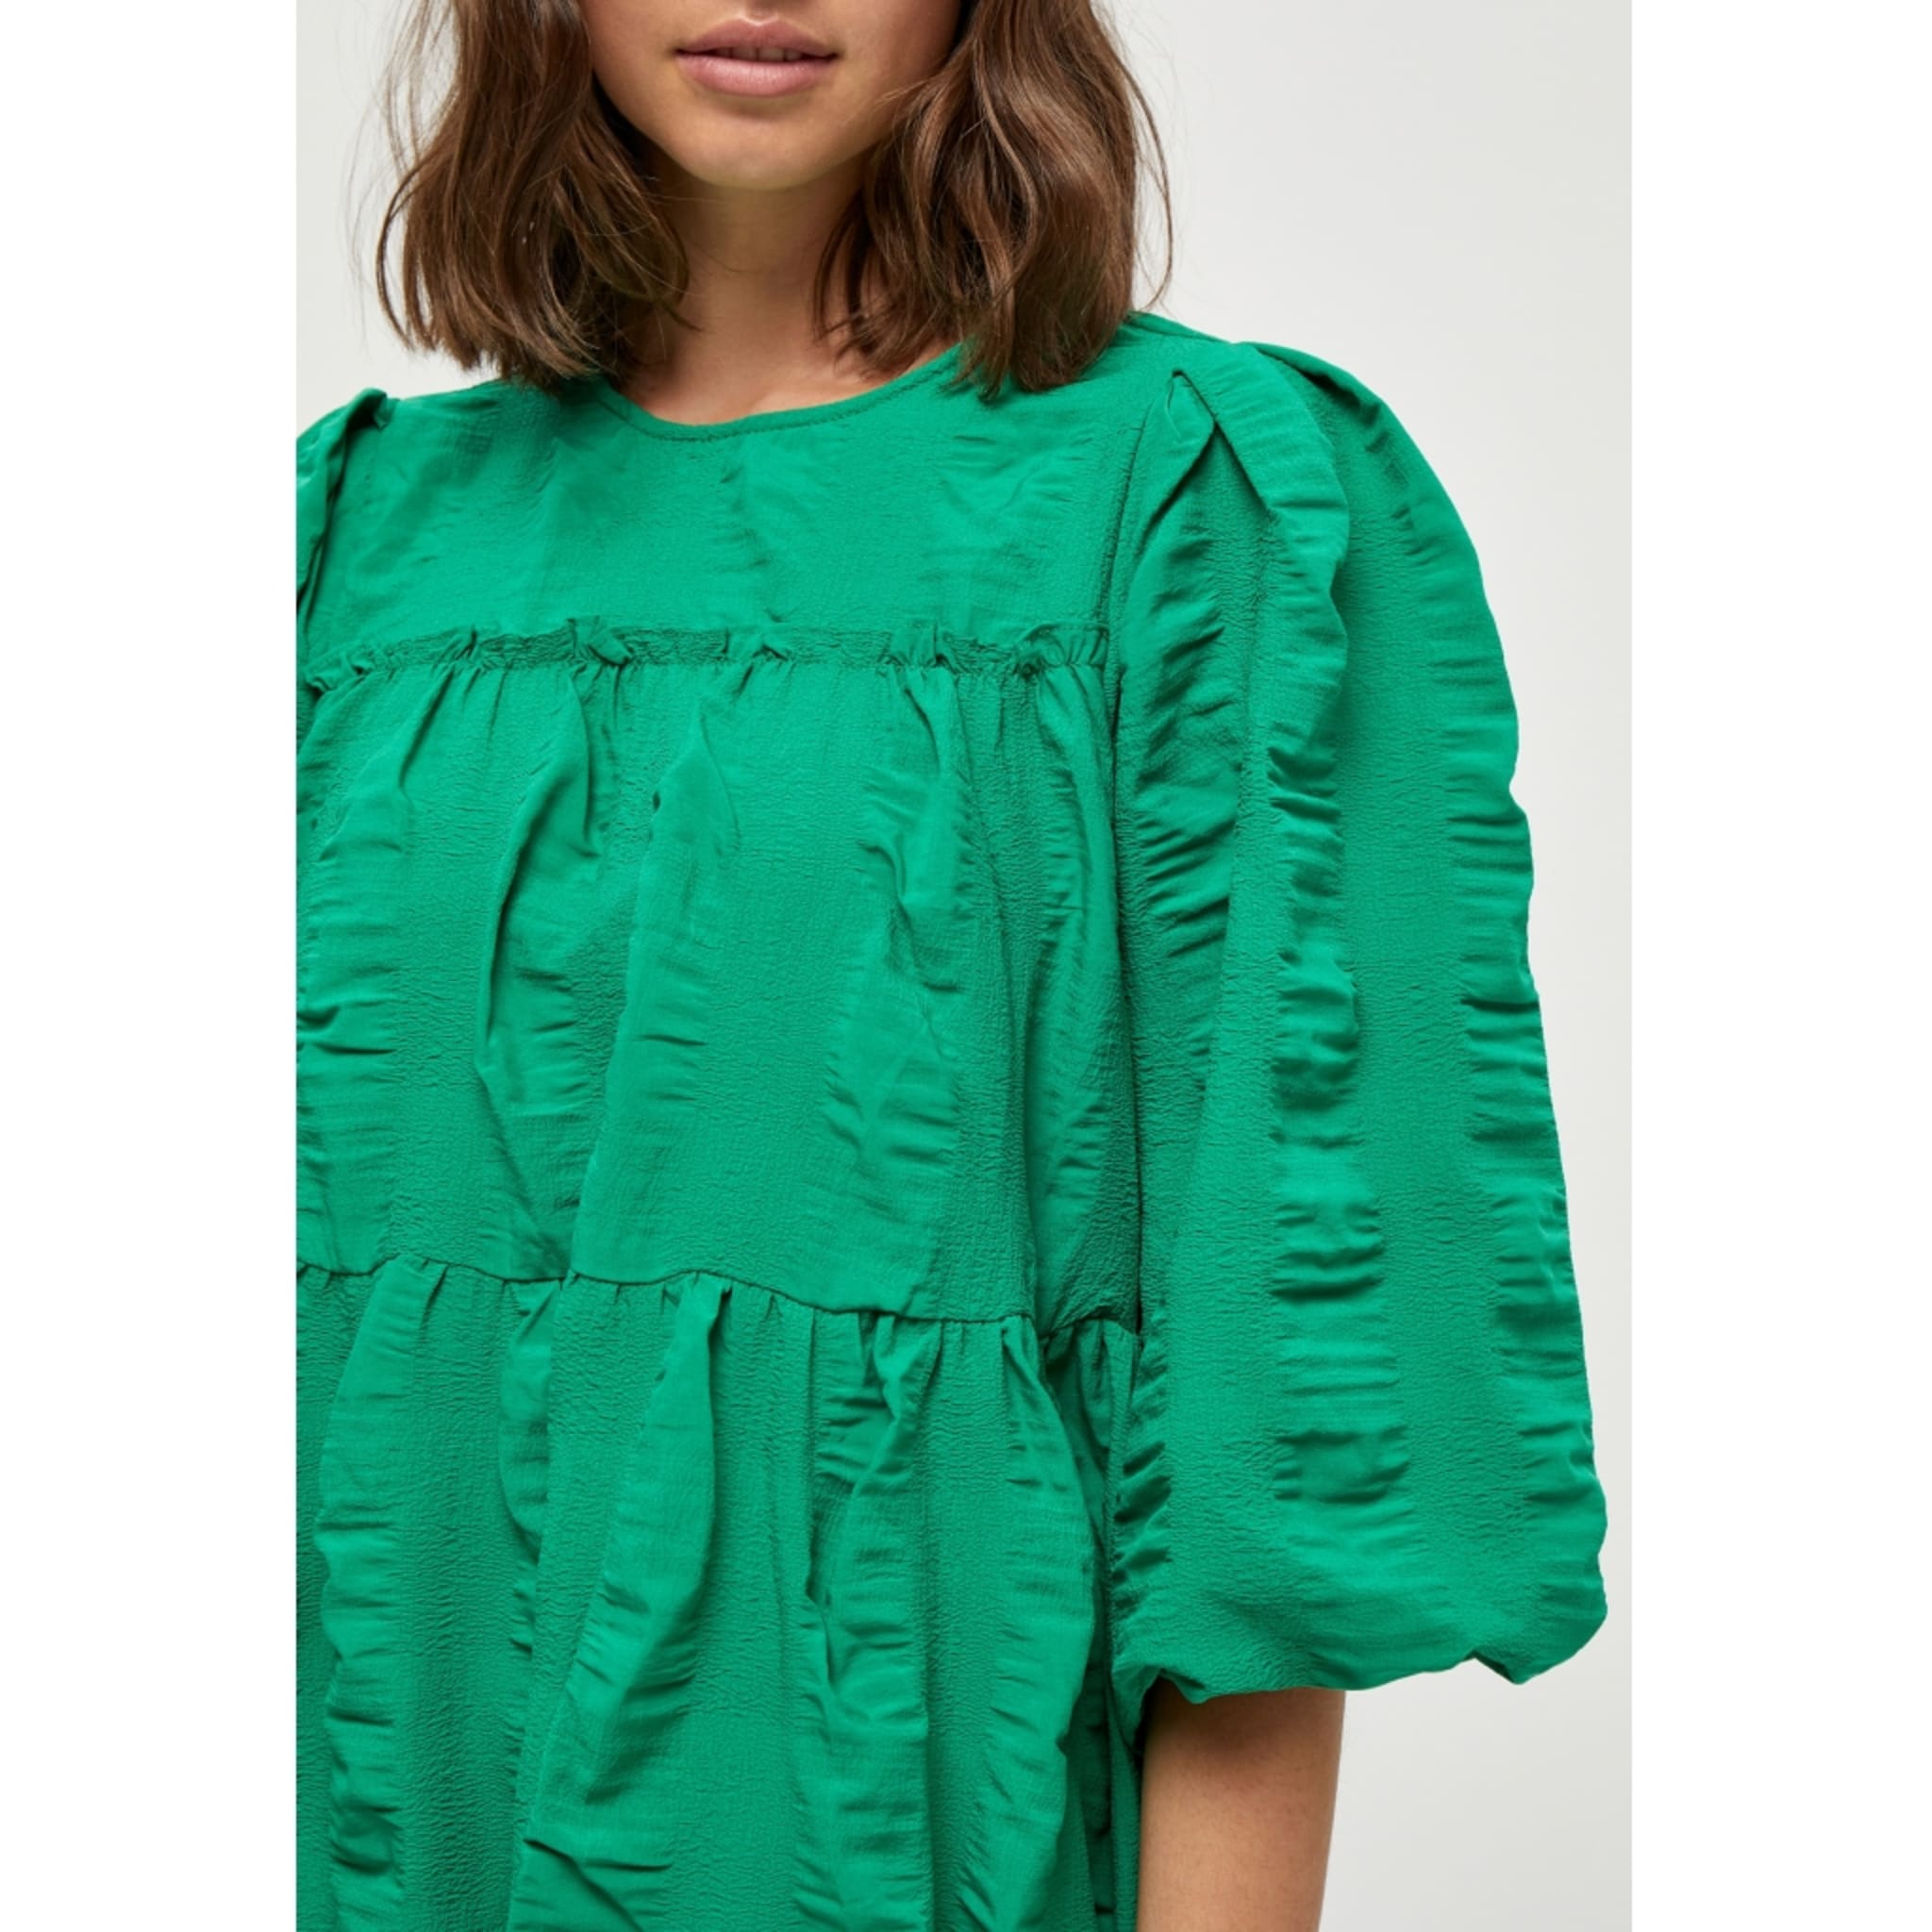 Lelia Dress, ivy green